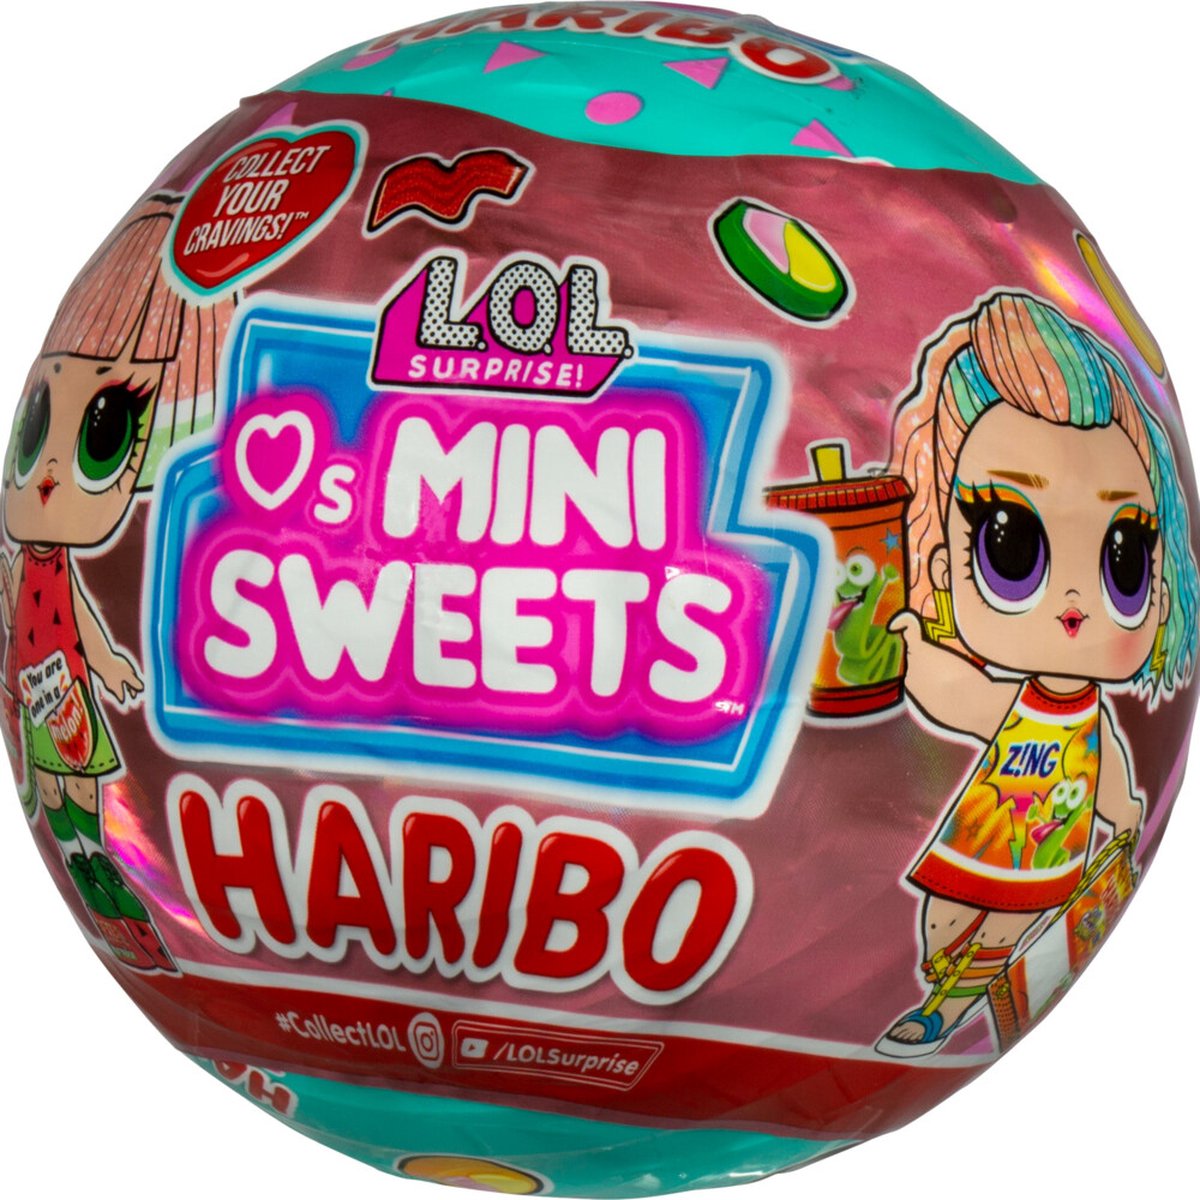 Promo LOL Surprise Loves Mini Sweets X Haribo dolls - Kota Tangerang -  Bippity Boppity Bop